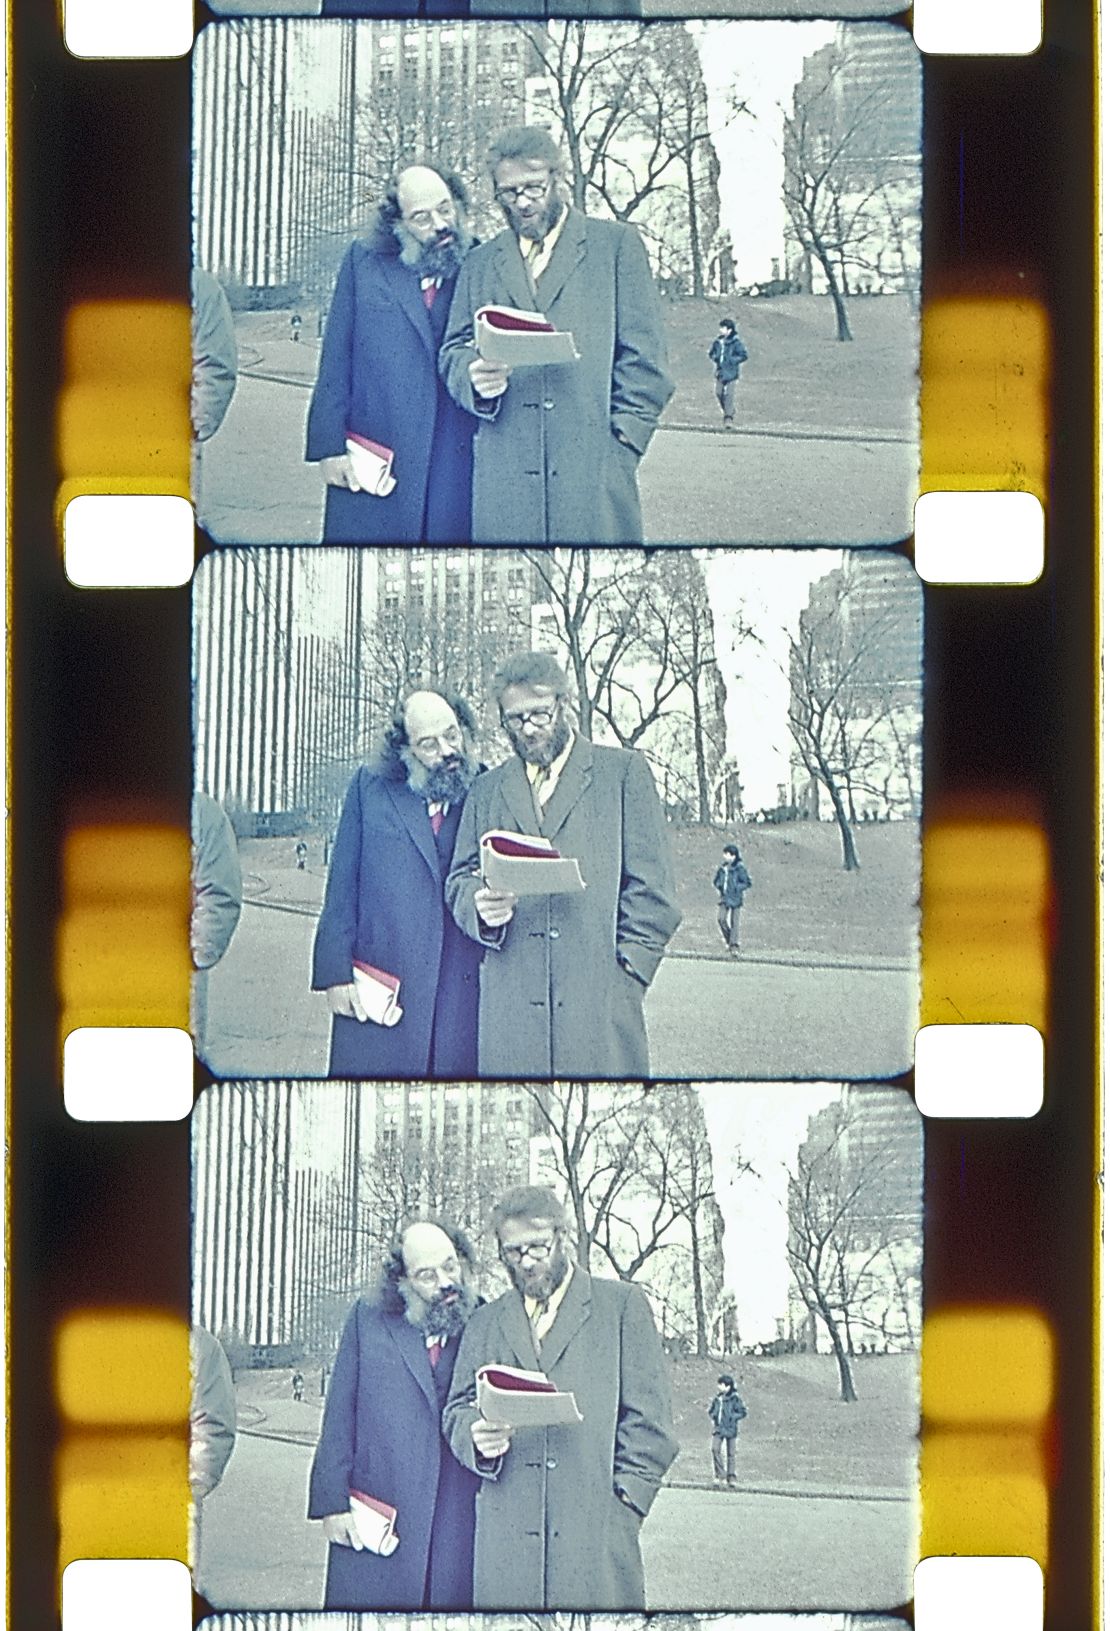 Poets Allen Ginsberg and Peter Orlovsky in Central park, c.1980.